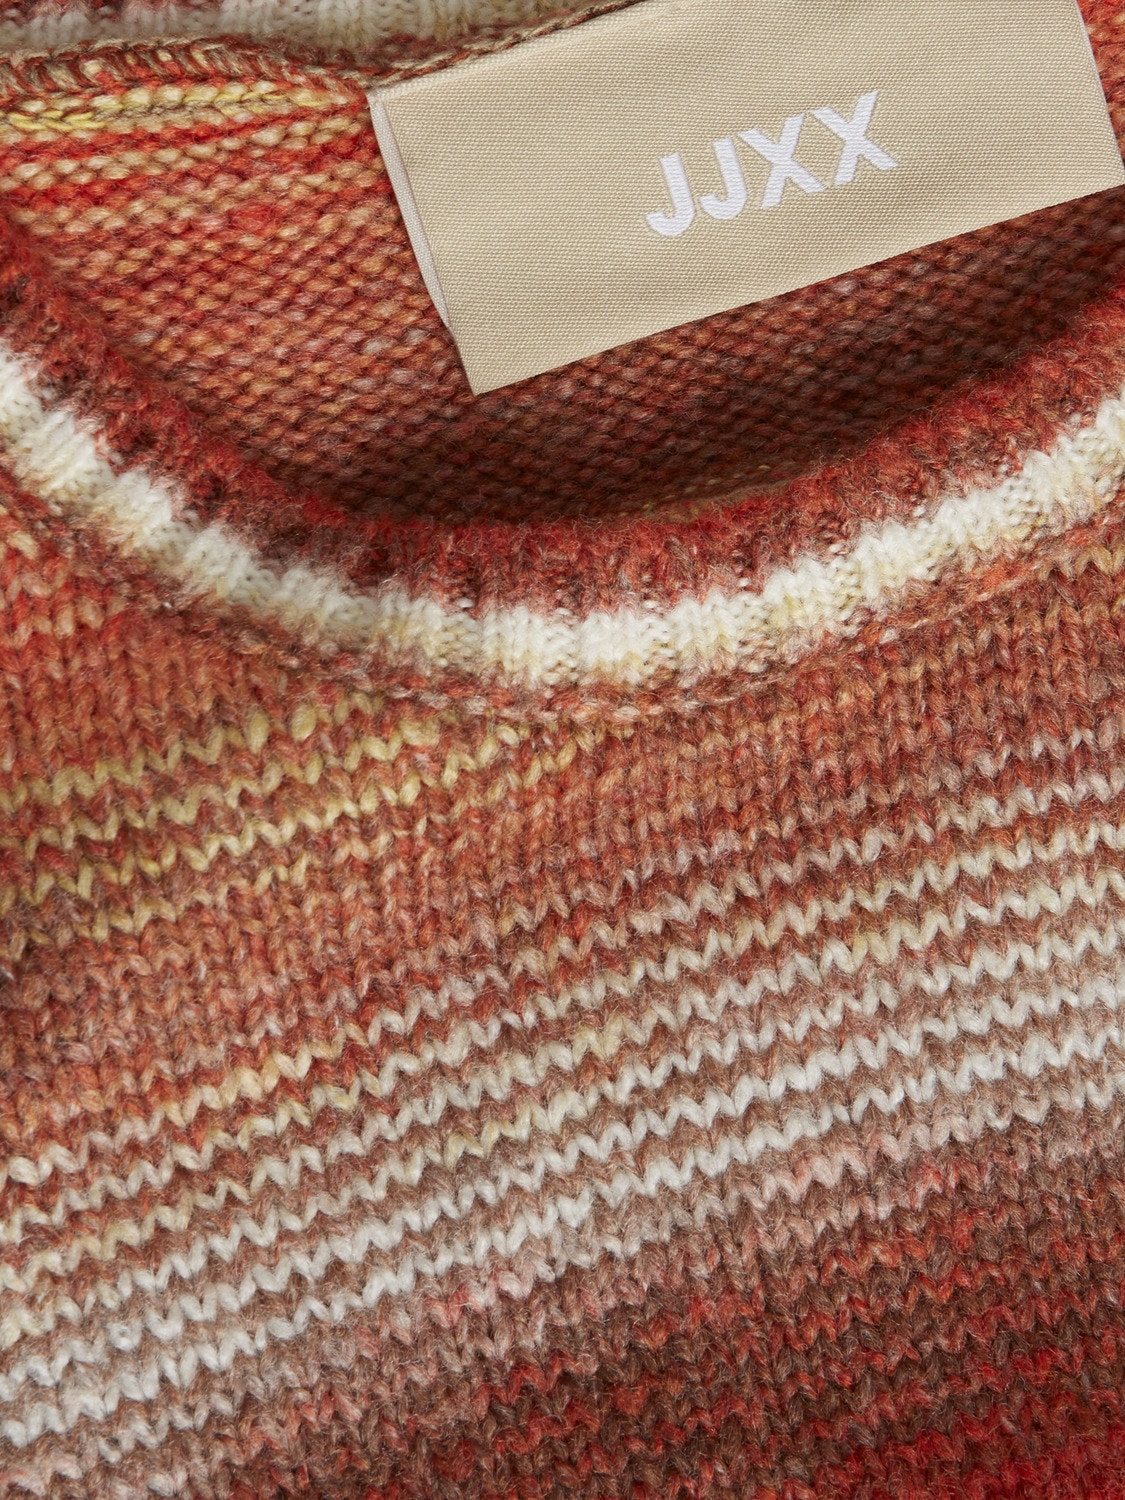 JJXX JXREESE Knitted top -Poinciana - 12241793